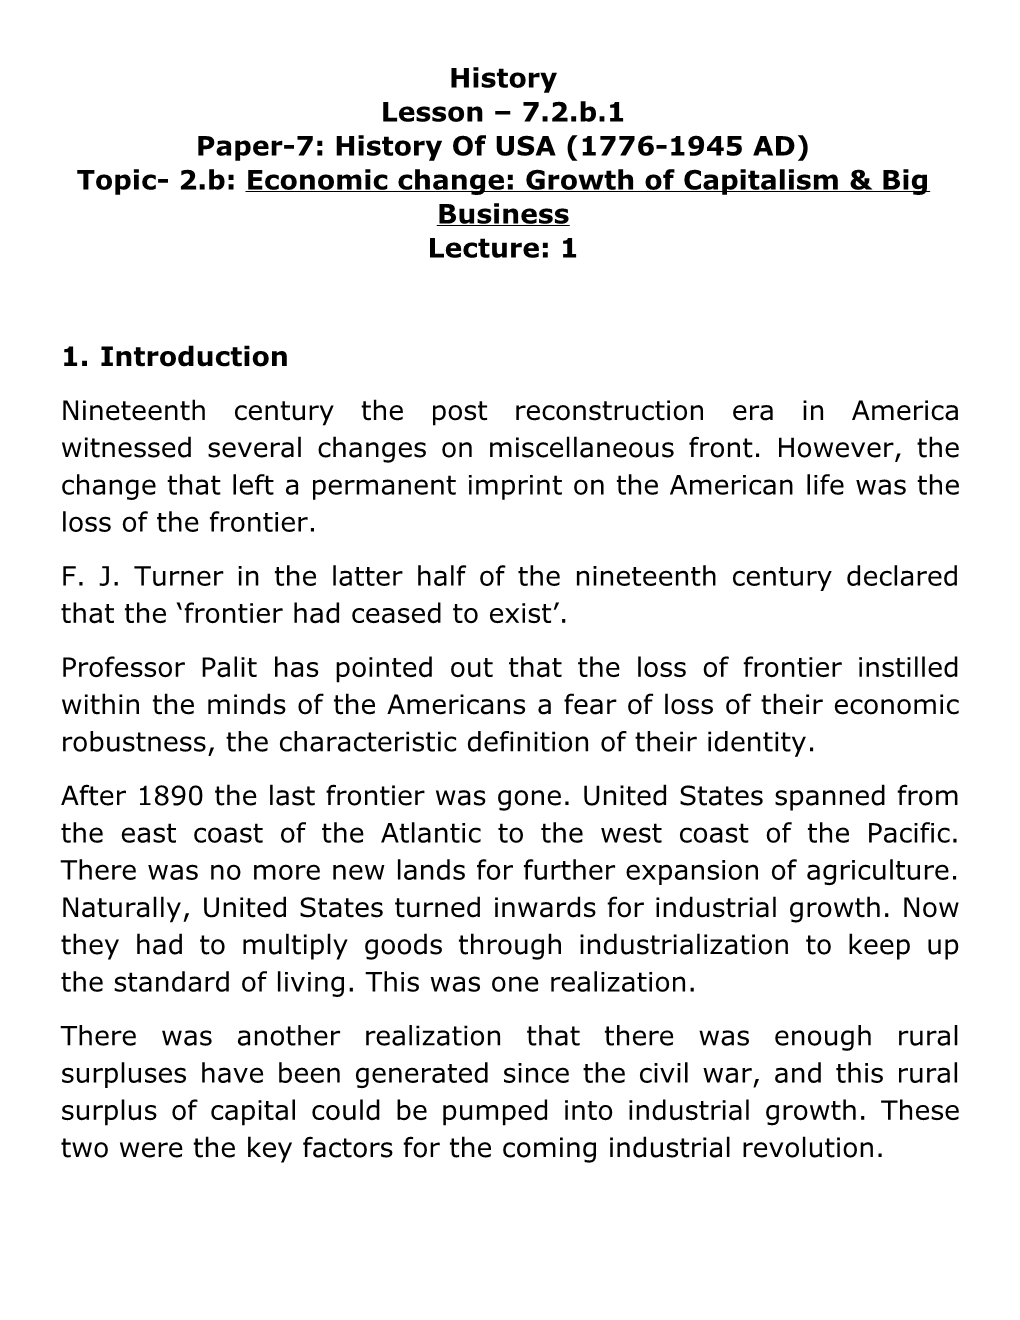 Topic- 2.B: Economic Change: Growth of Capitalism & Big Business